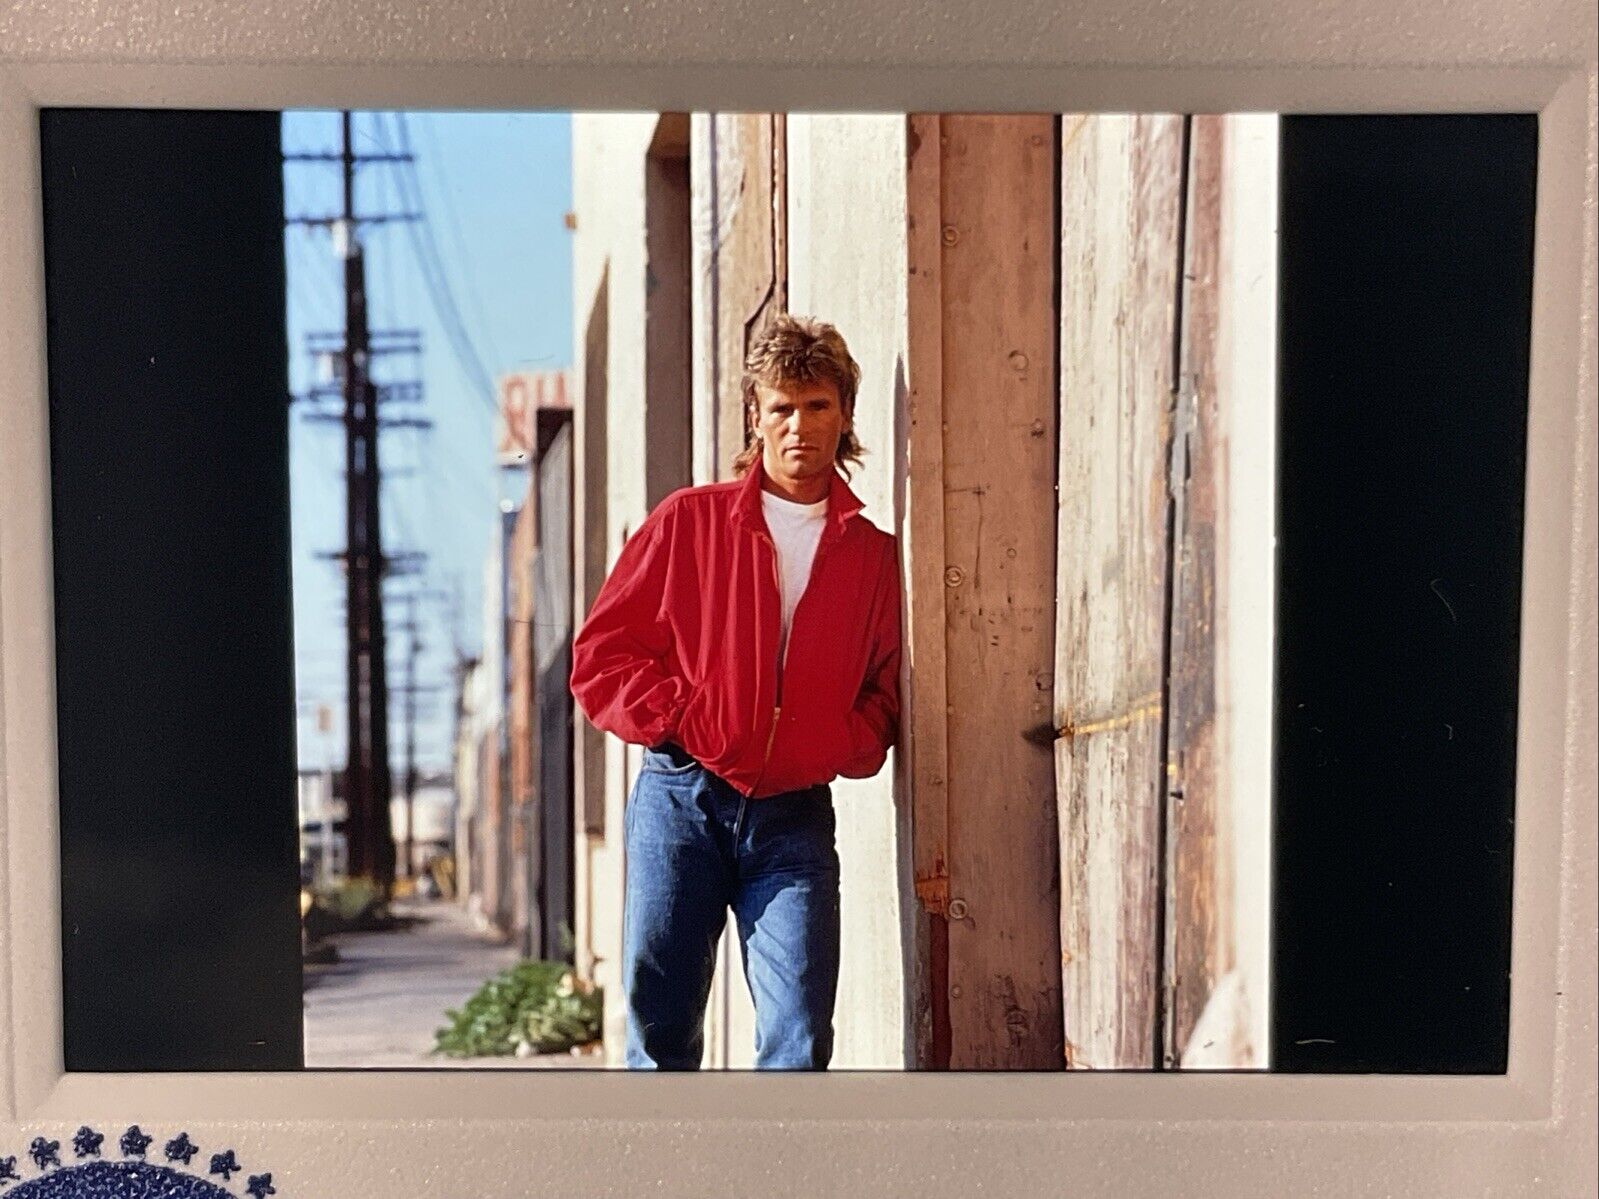 1988 Macgyver Richard Dean Anderson 35mm Transparency Color Slide